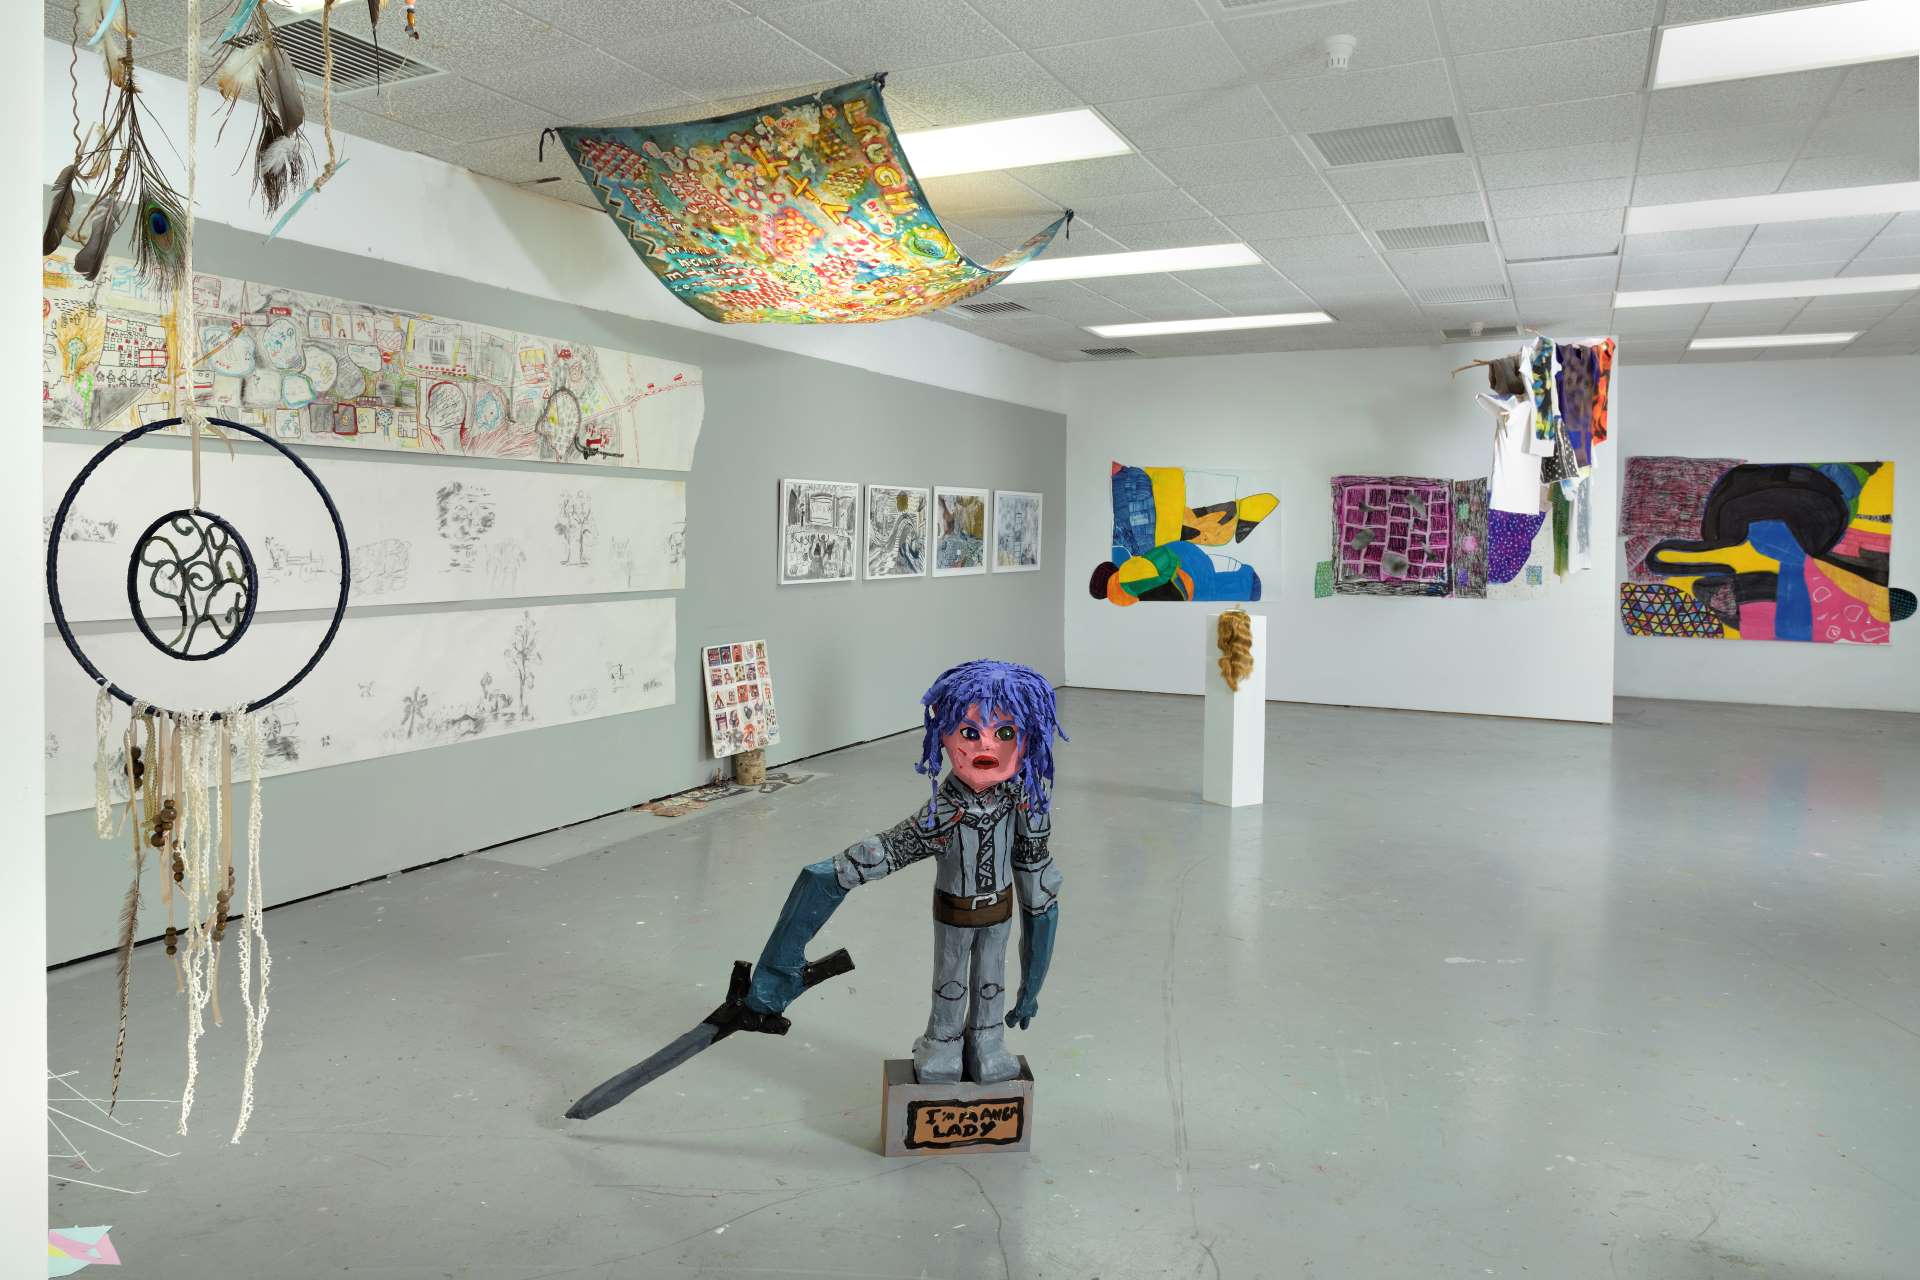 Exhibition of art work